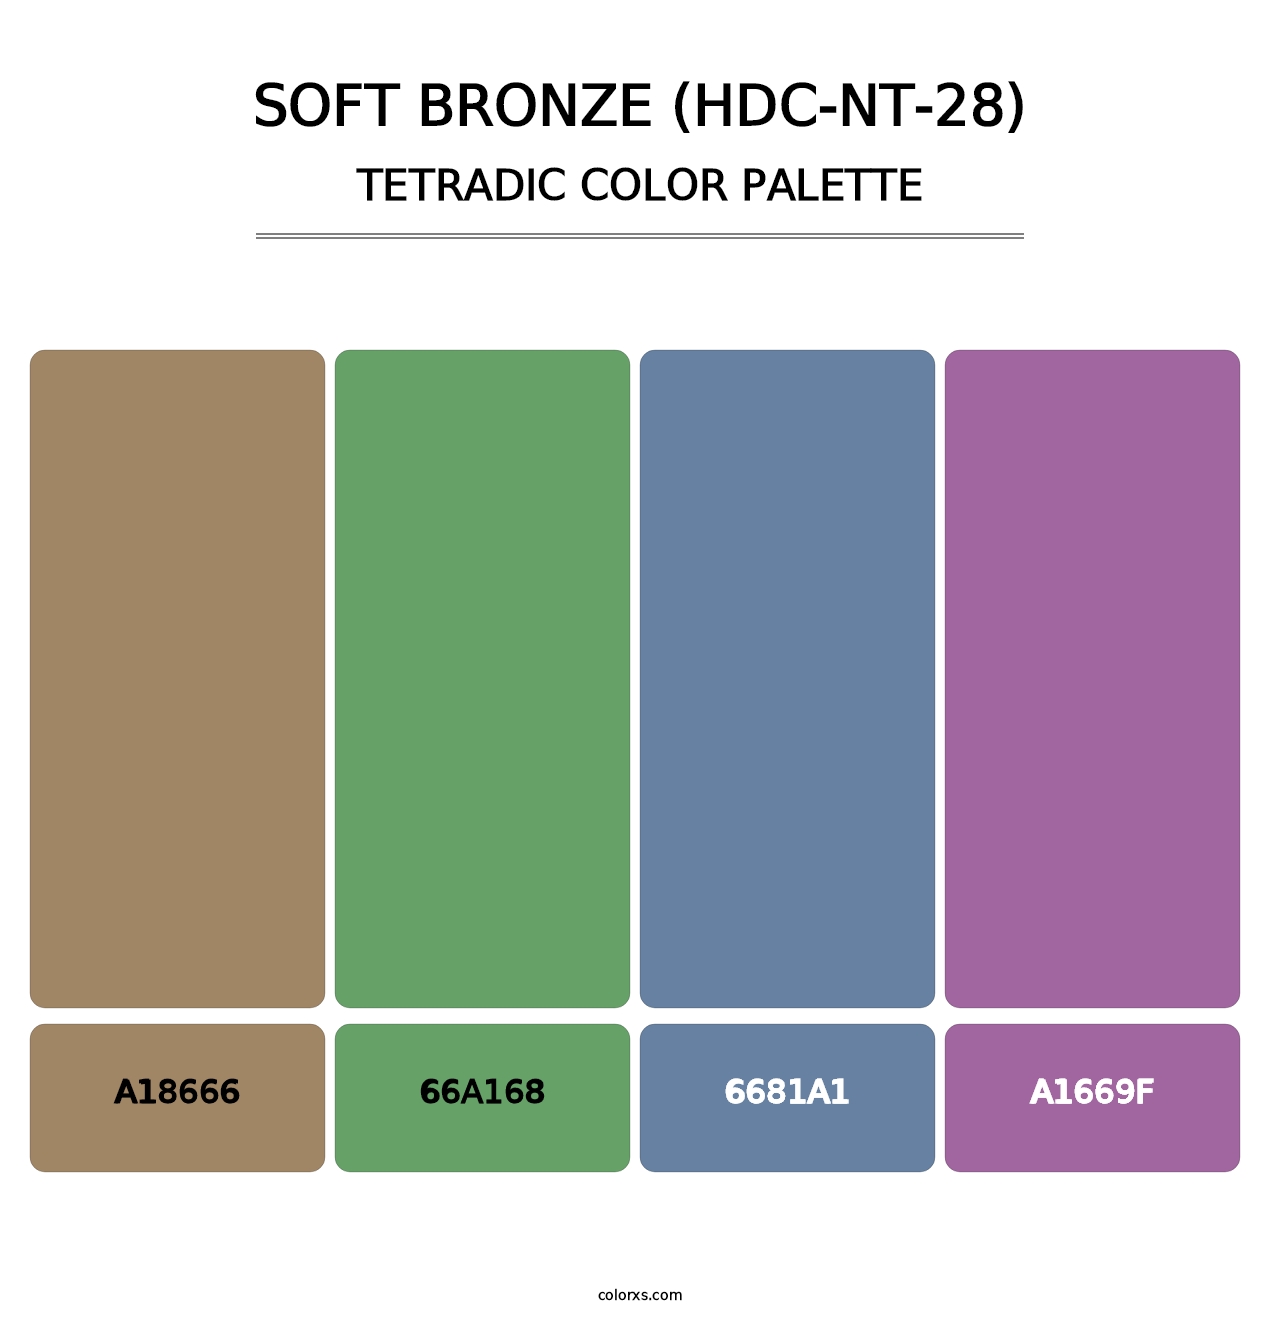 Soft Bronze (HDC-NT-28) - Tetradic Color Palette